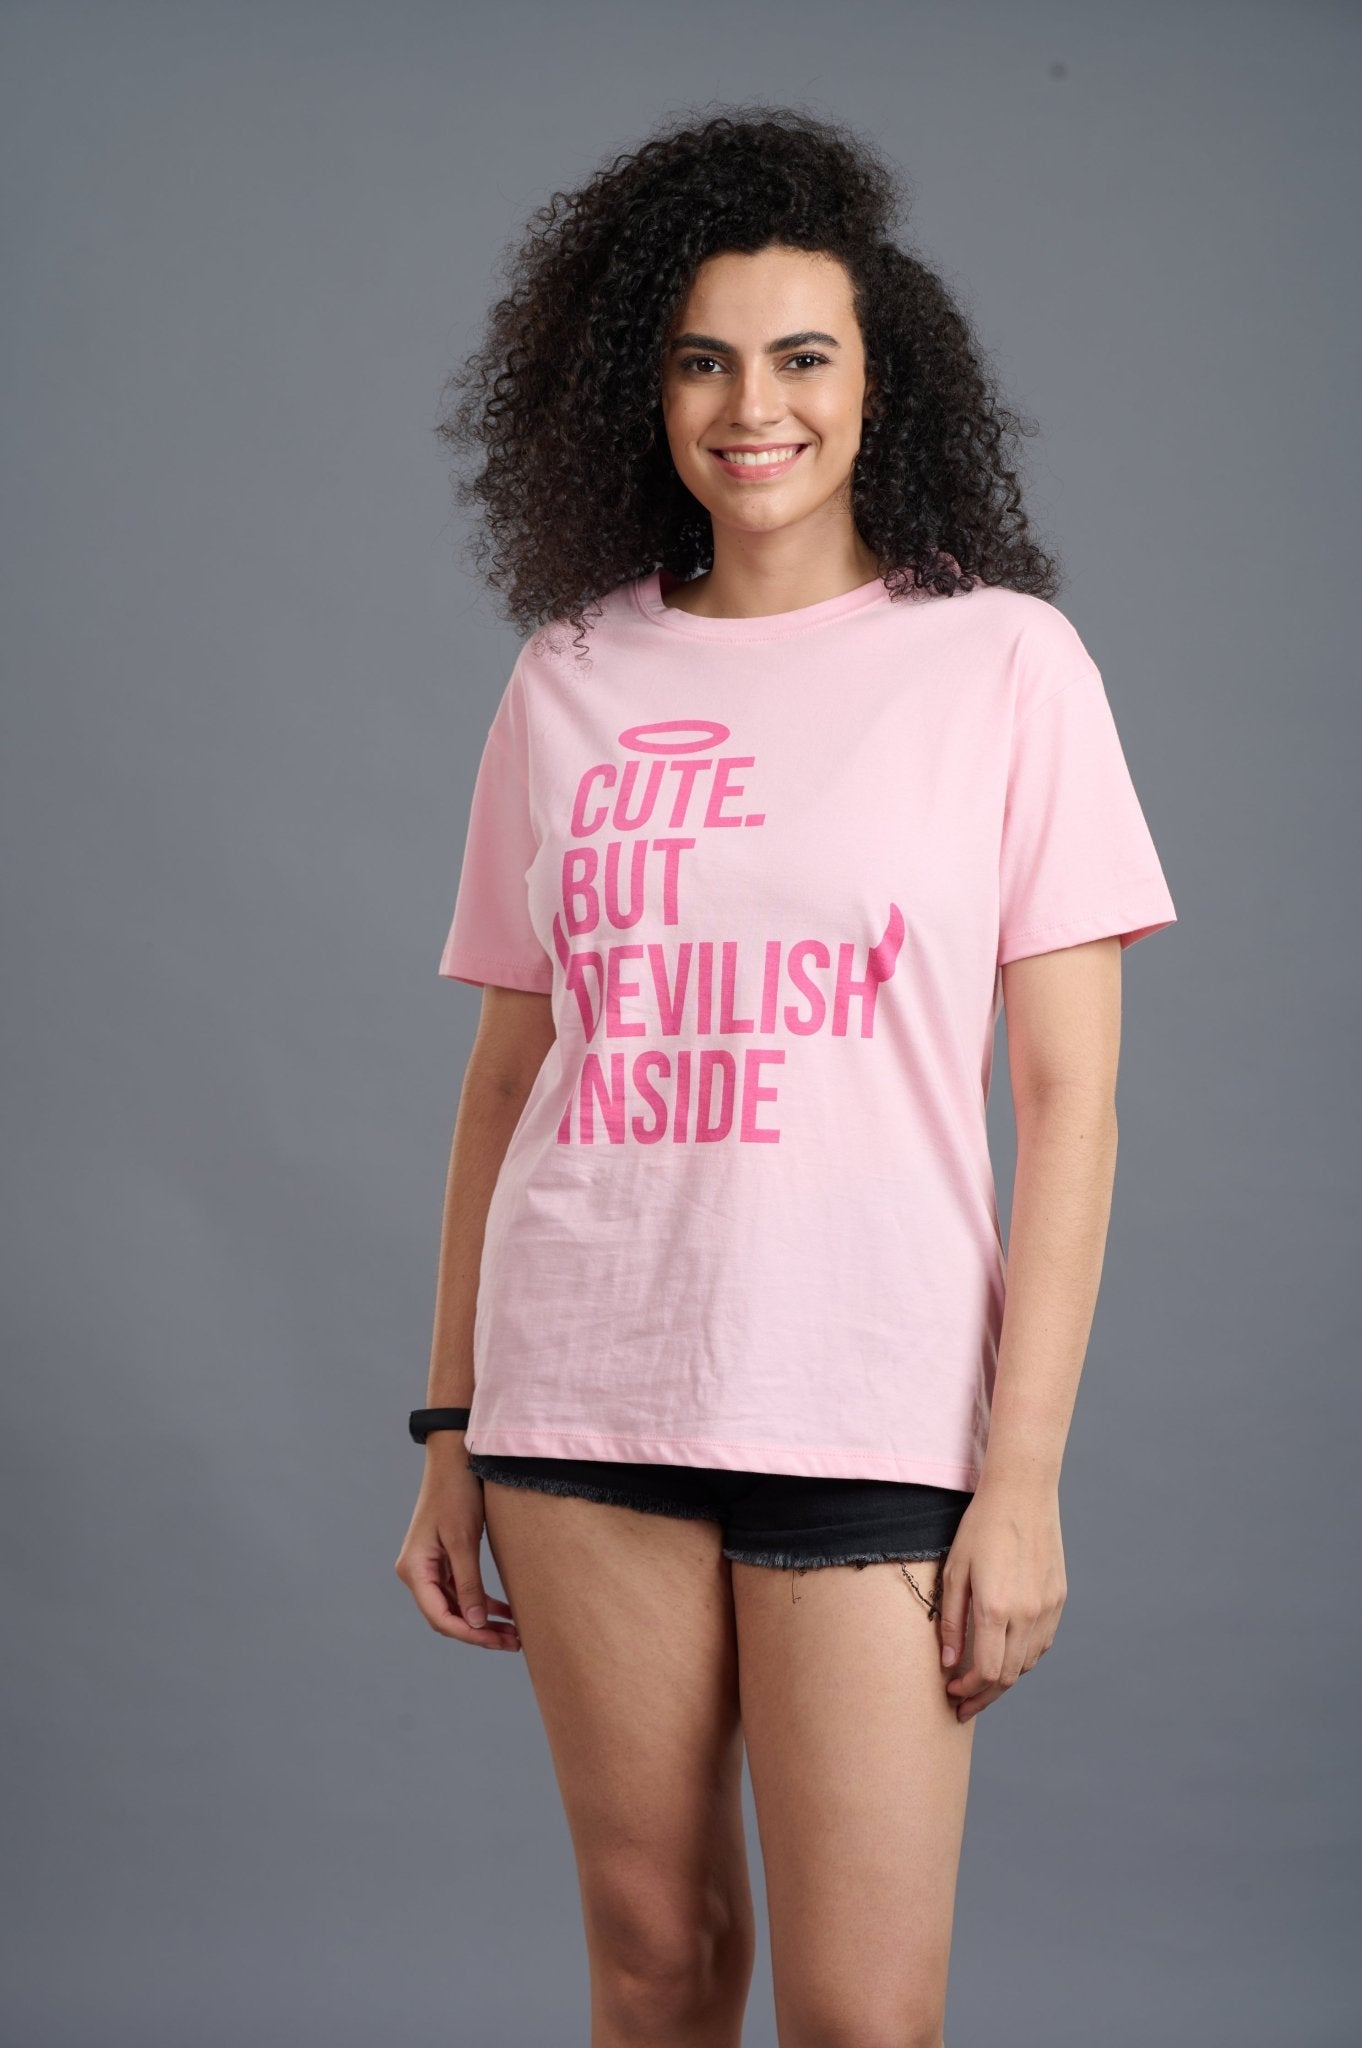 Cute But Devilish Inside Printed Pink Oversized T-Shirt for Women - Go Devil